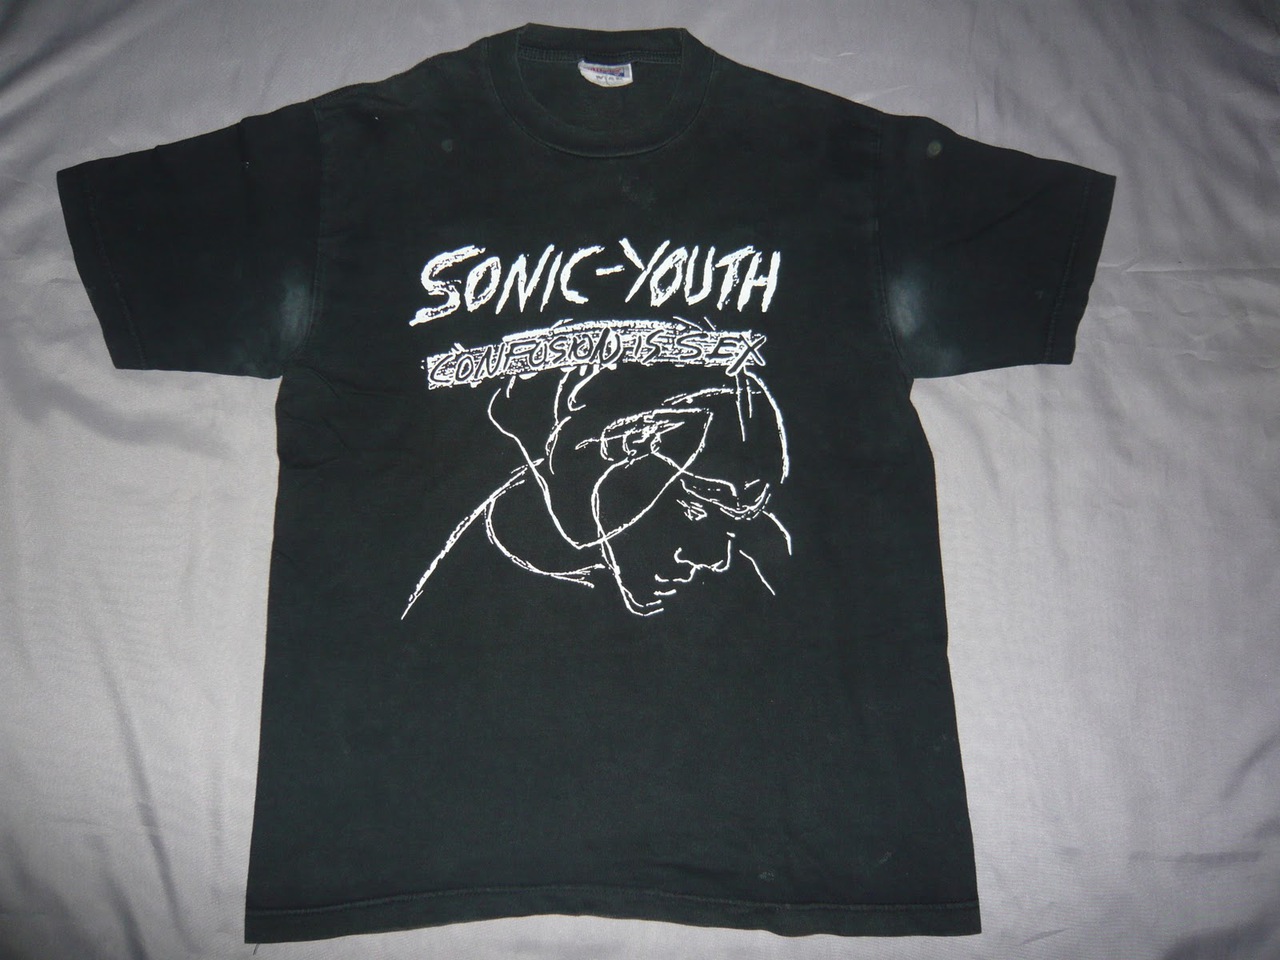 sonic youth wallpaper,t shirt,clothing,black,active shirt,sleeve